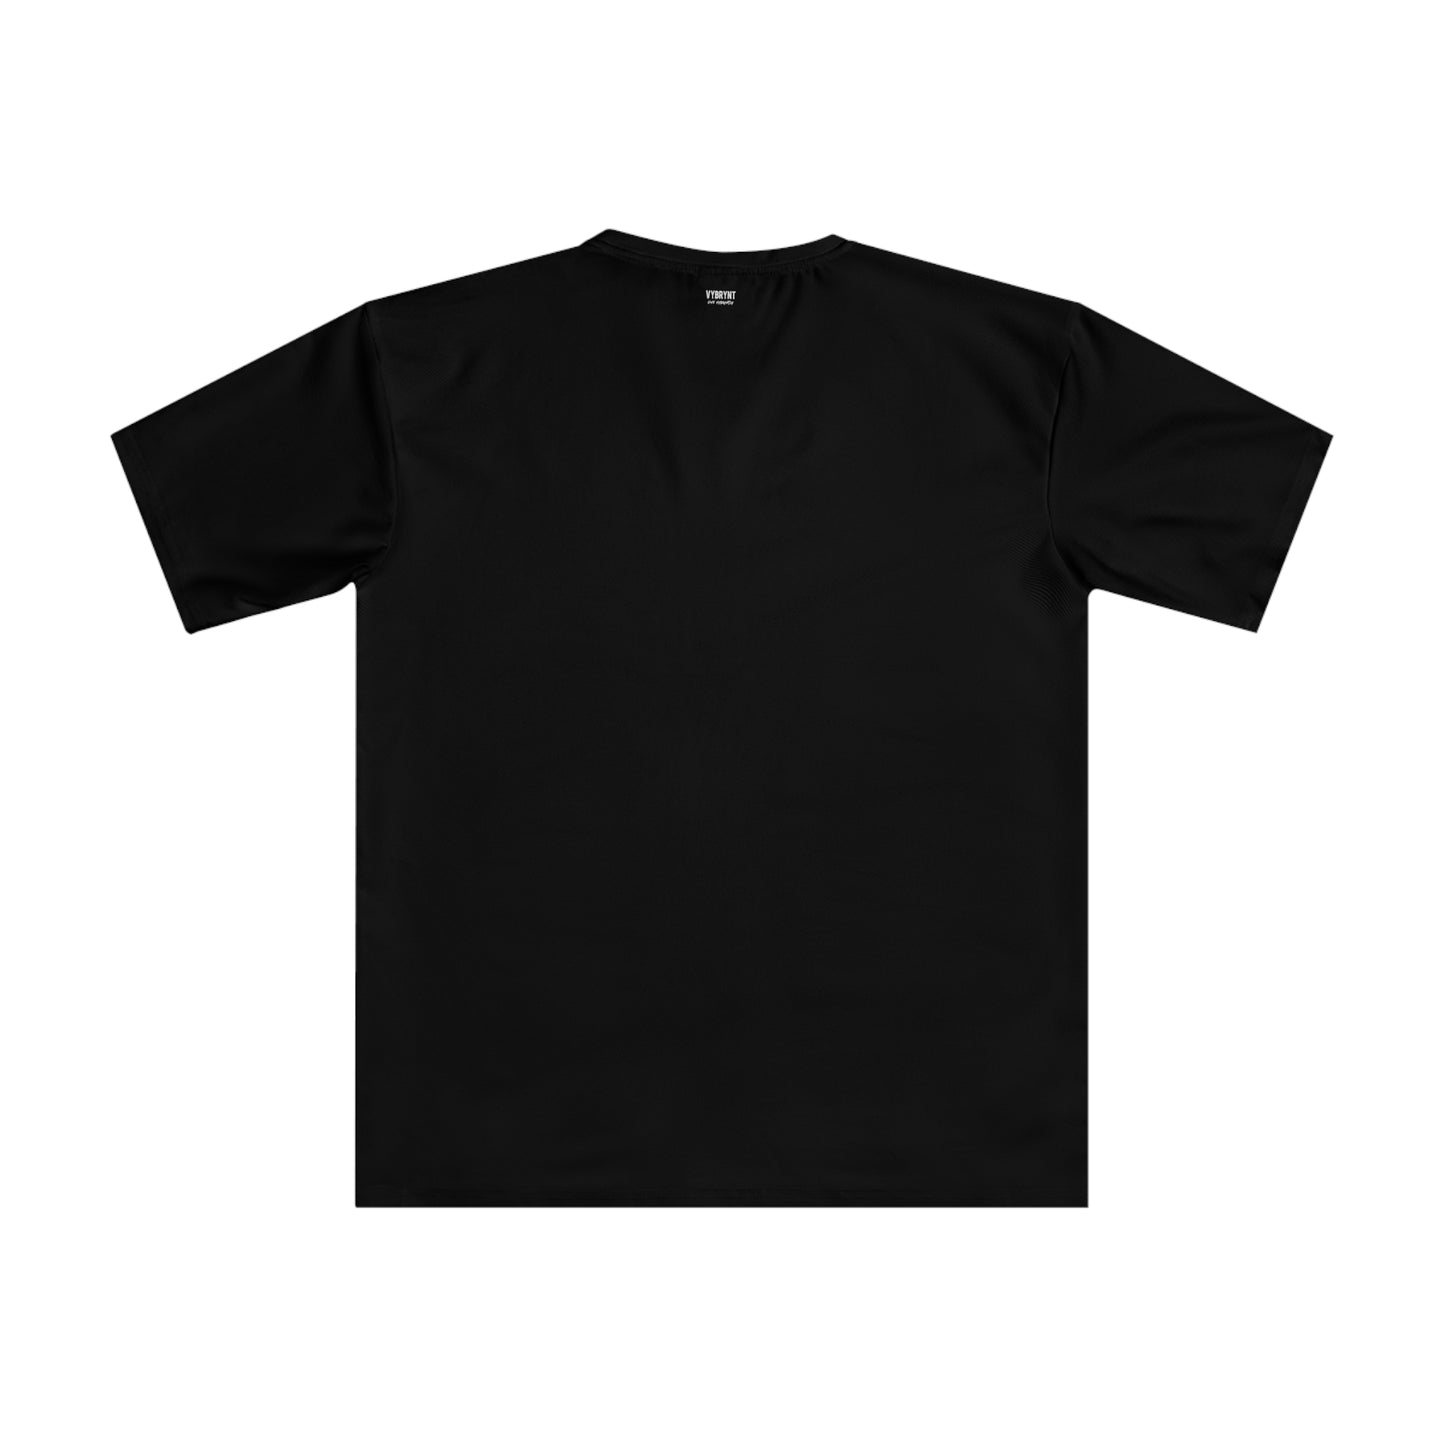 Brewed in NYC Men's Black T-shirt